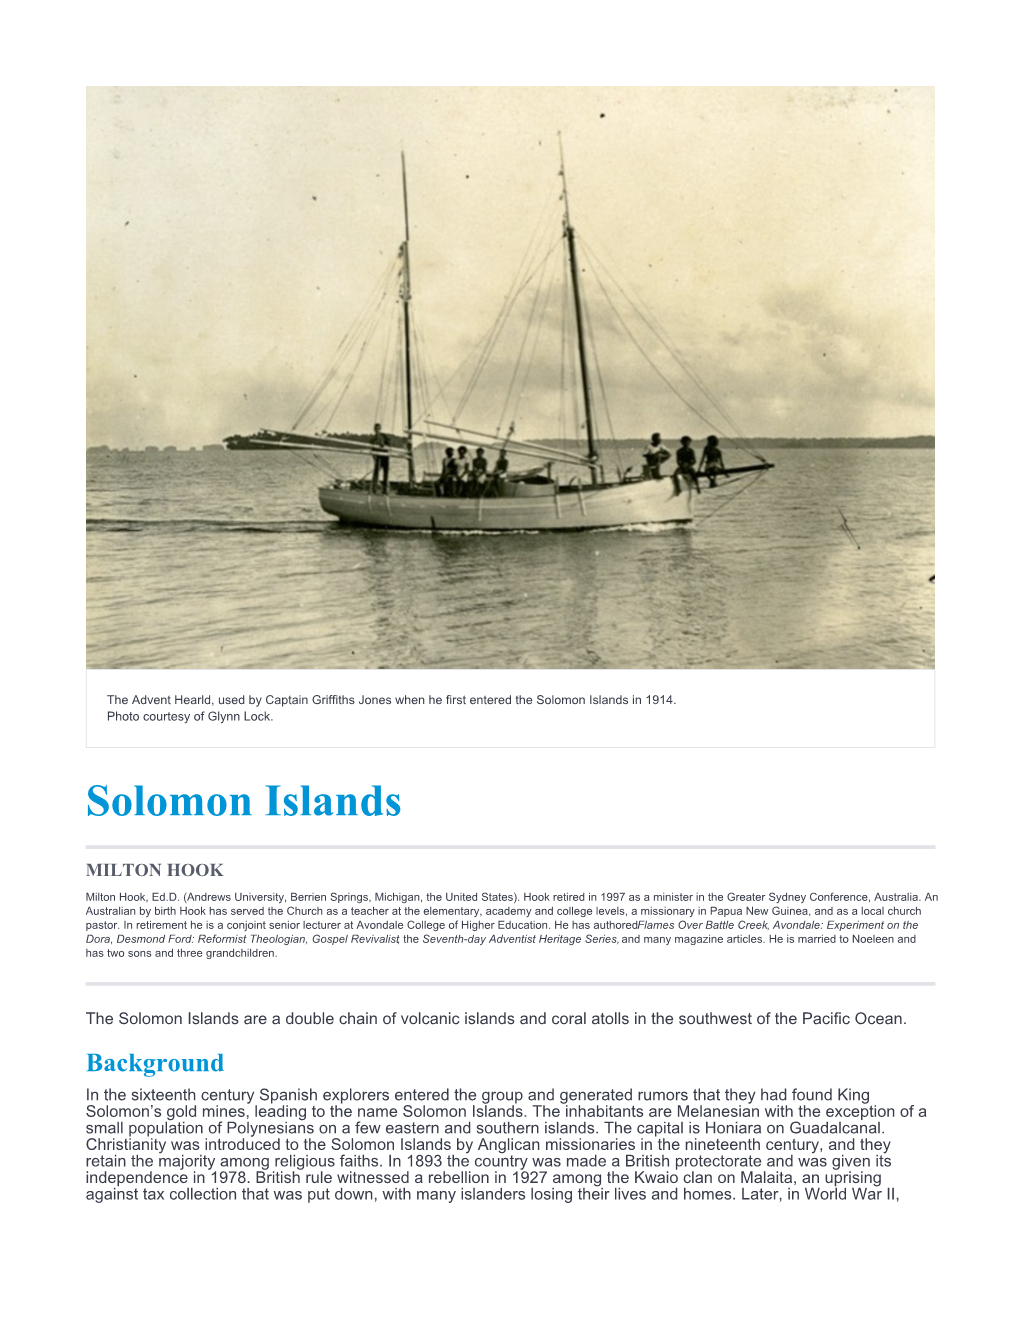 Solomon Islands in 1914